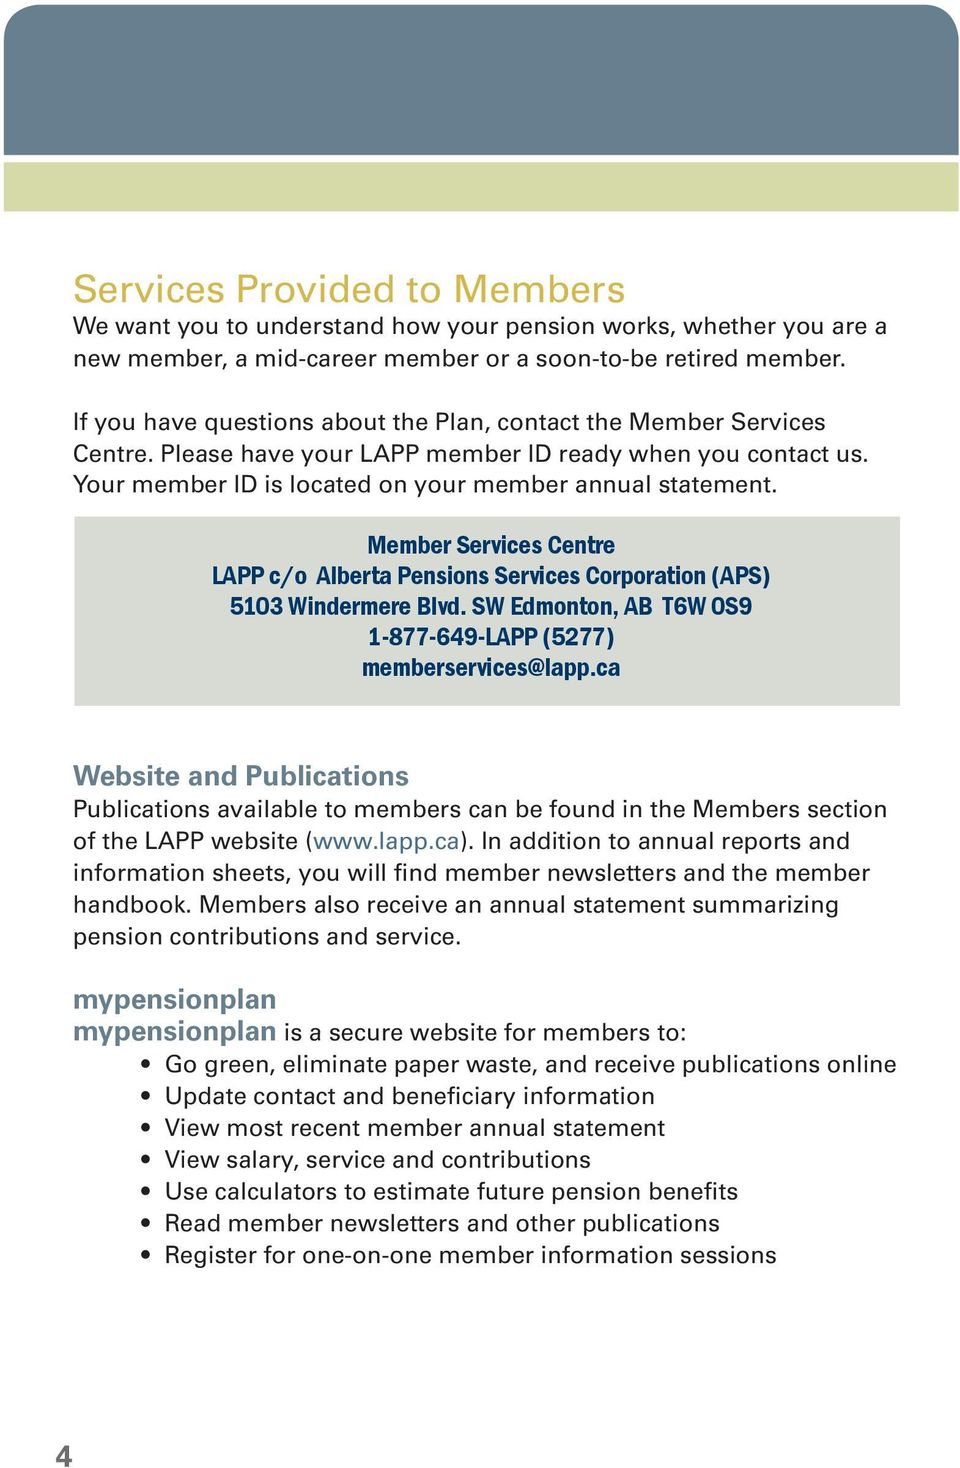 Member Services Centre LAPP c/o Alberta Pensions Services Corporation (APS) 5103 Windermere Blvd. SW Edmonton, AB T6W 0S9 1-877-649-LAPP (5277) memberservices@lapp.